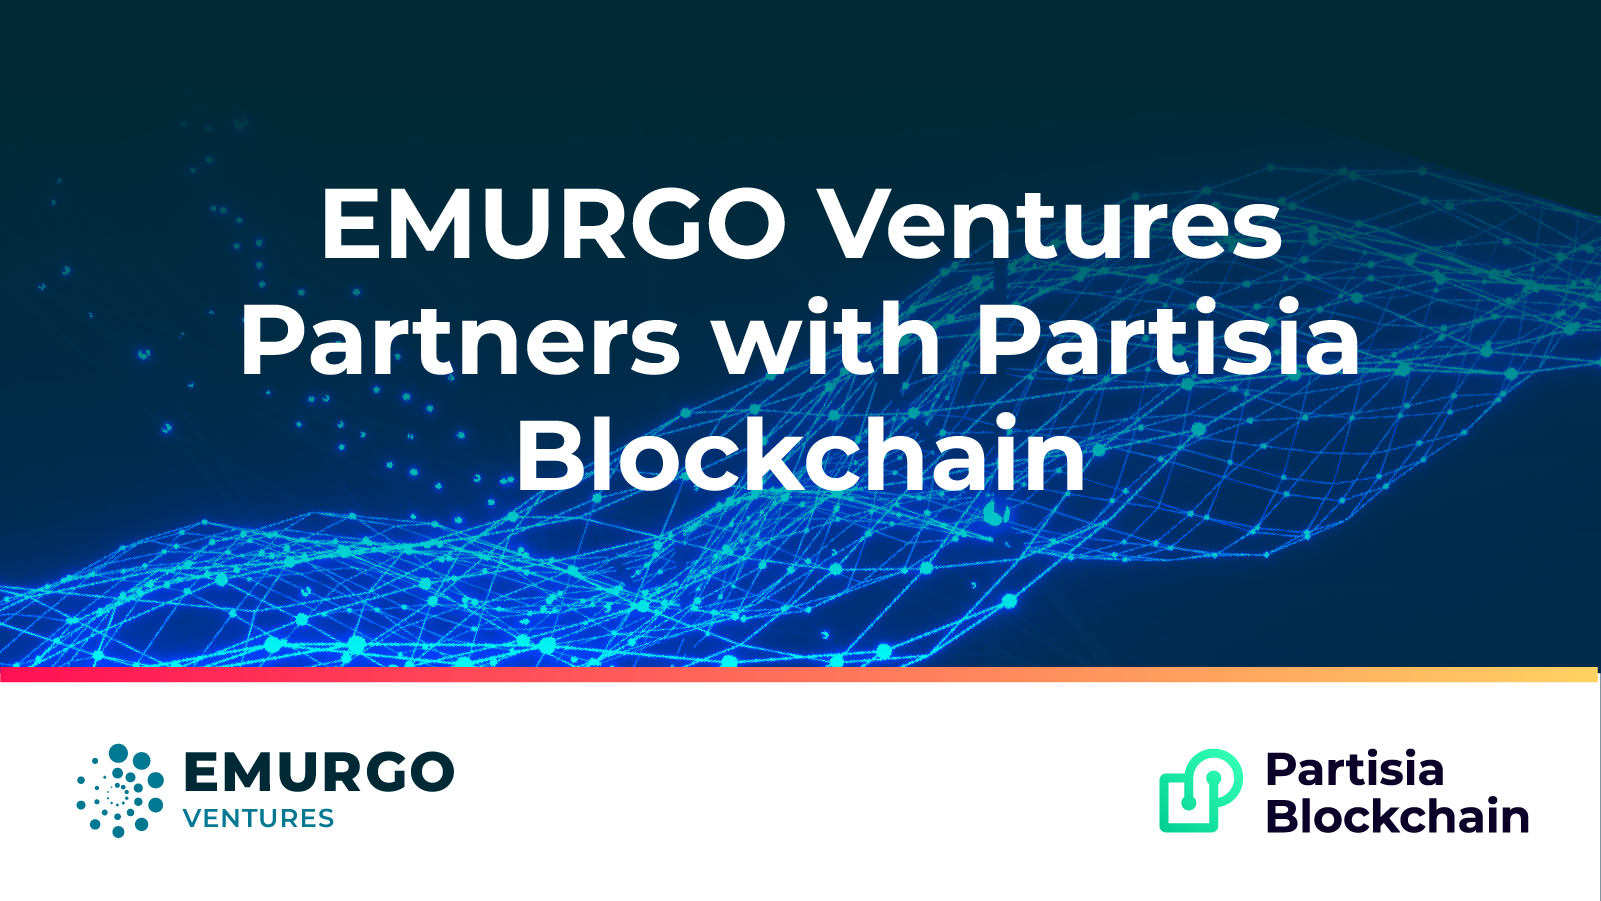 EMURGO-Ventures-Partnership-Partisia-Blockchain-Cardano-Privacy-Features1.png